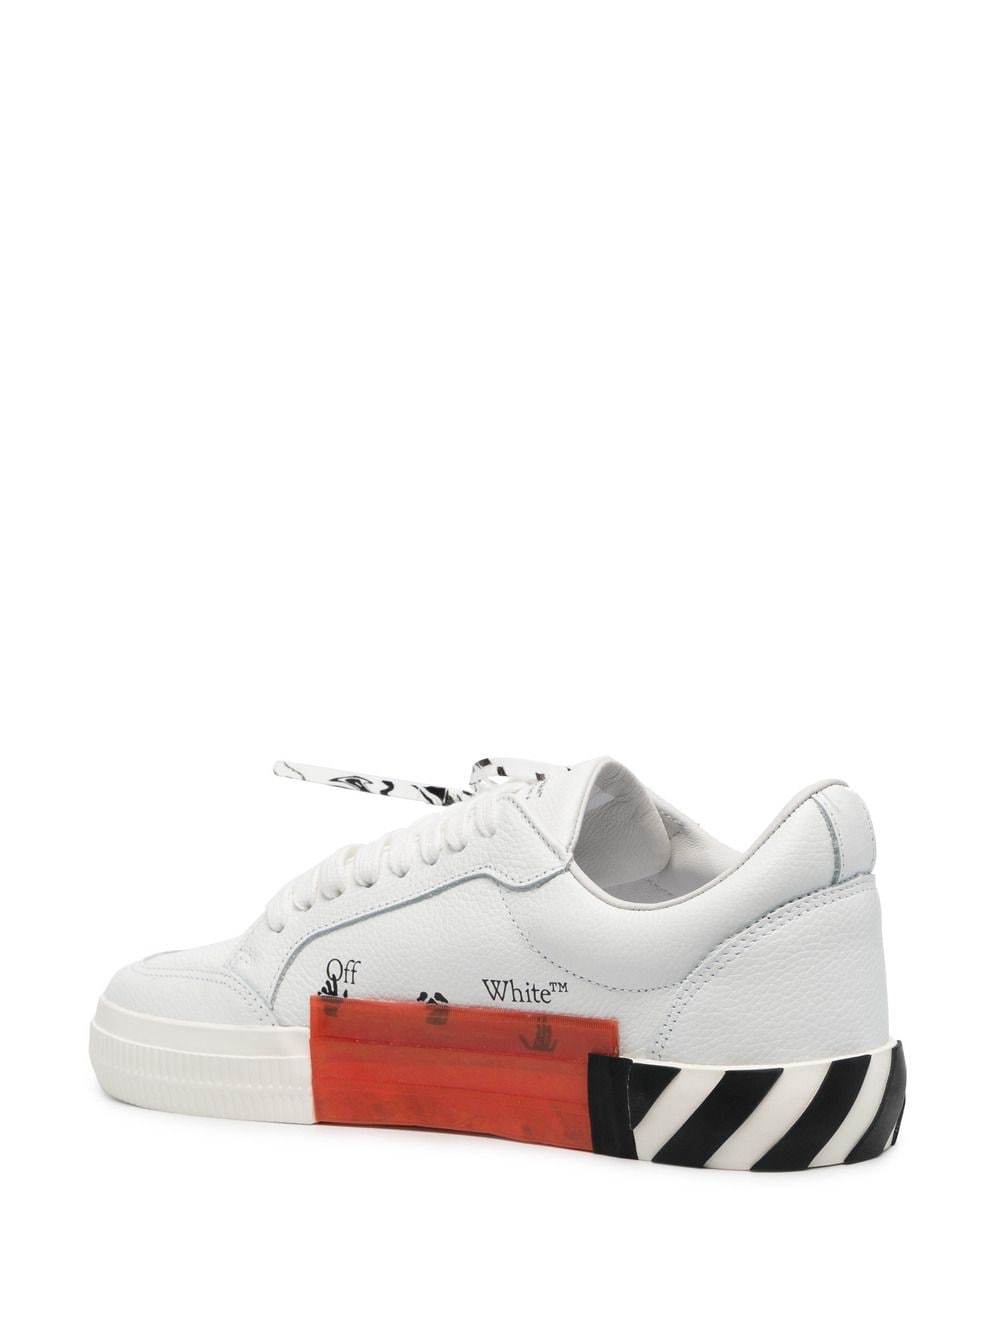 OFF-WHITE Low Vulcanized Sneakers White/Blue - MAISONDEFASHION.COM